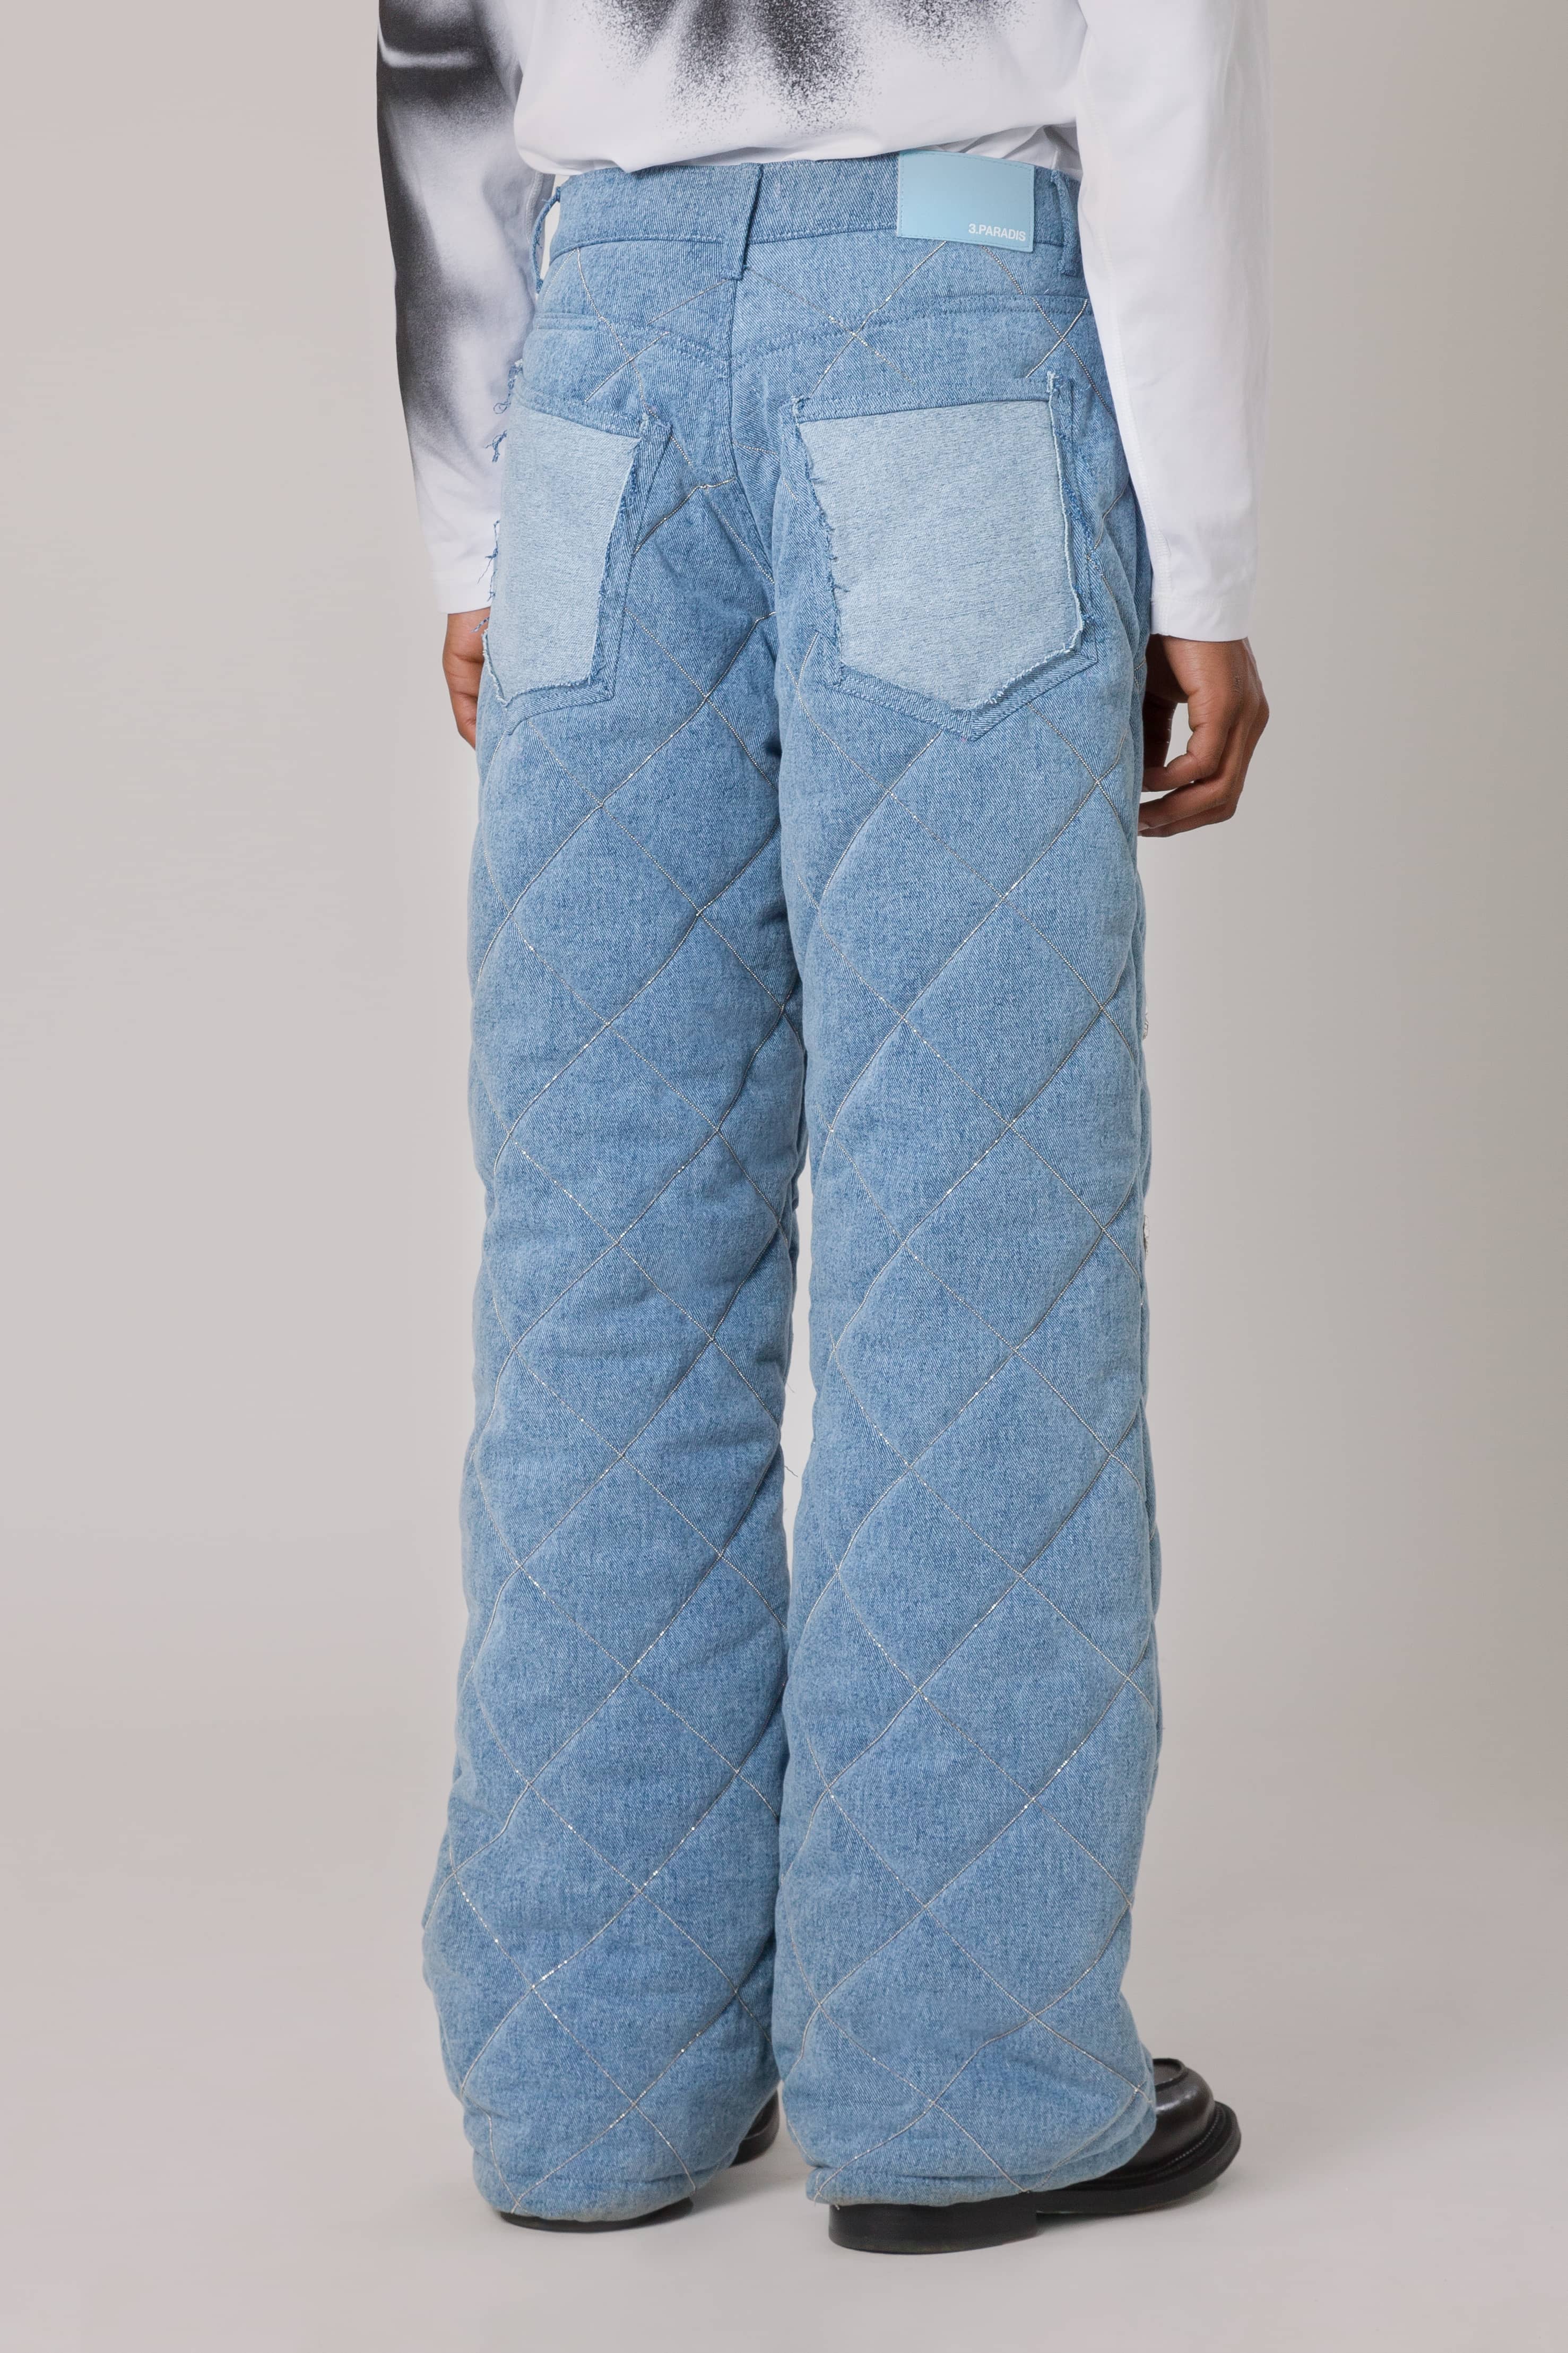 Diamond Quilted Swarovski Crystal Denim Jeans